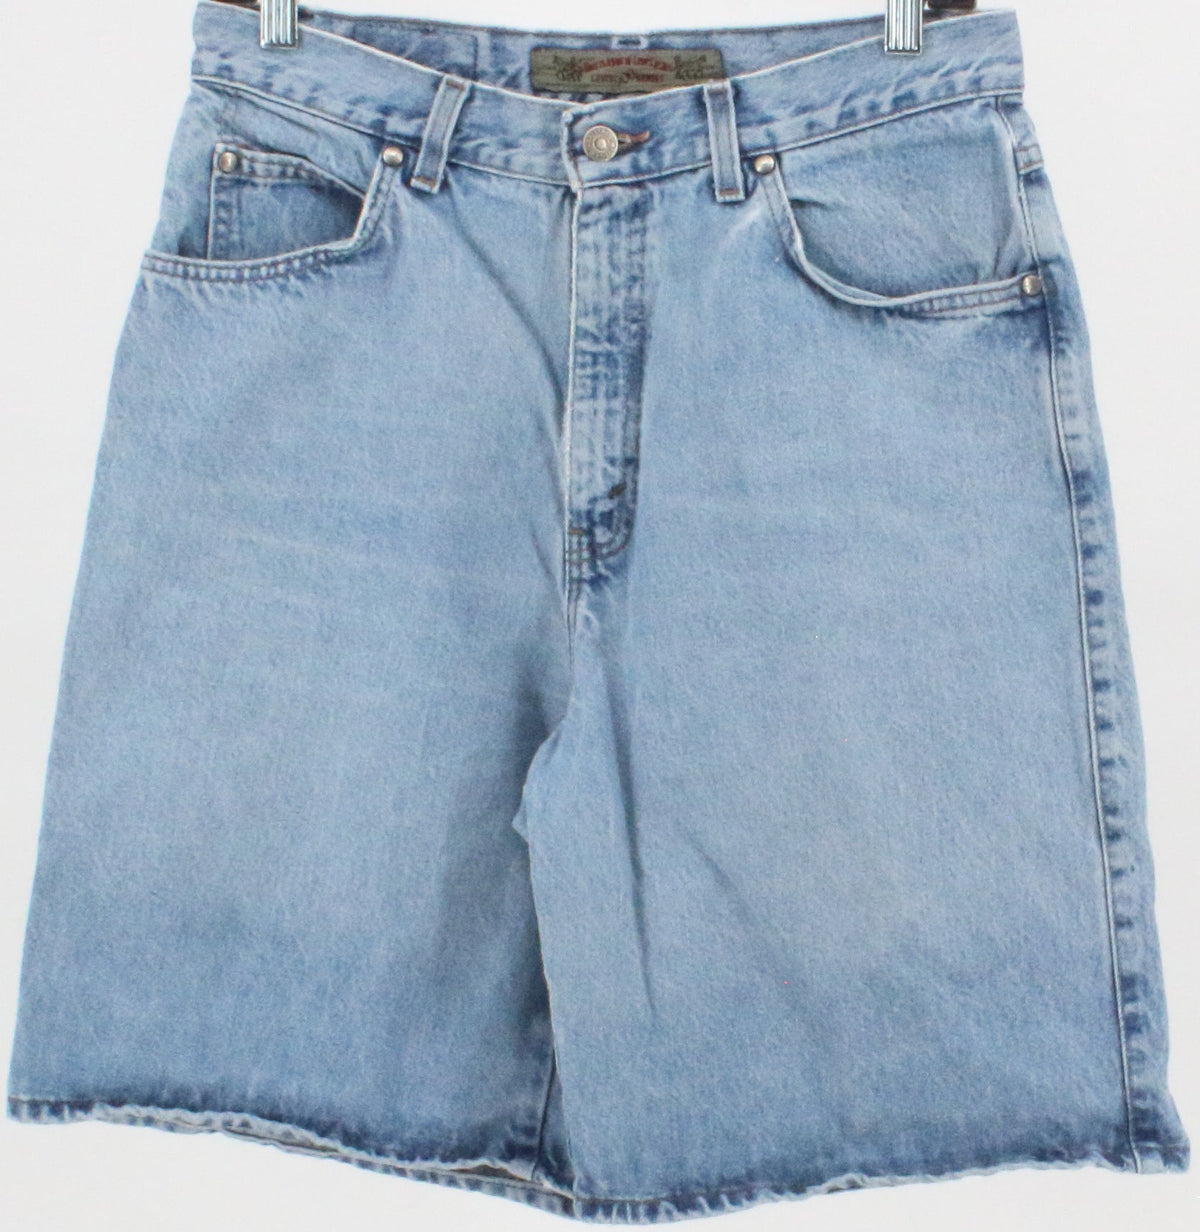 Levis 900 Series Blue Wash Denim Mid Shorts